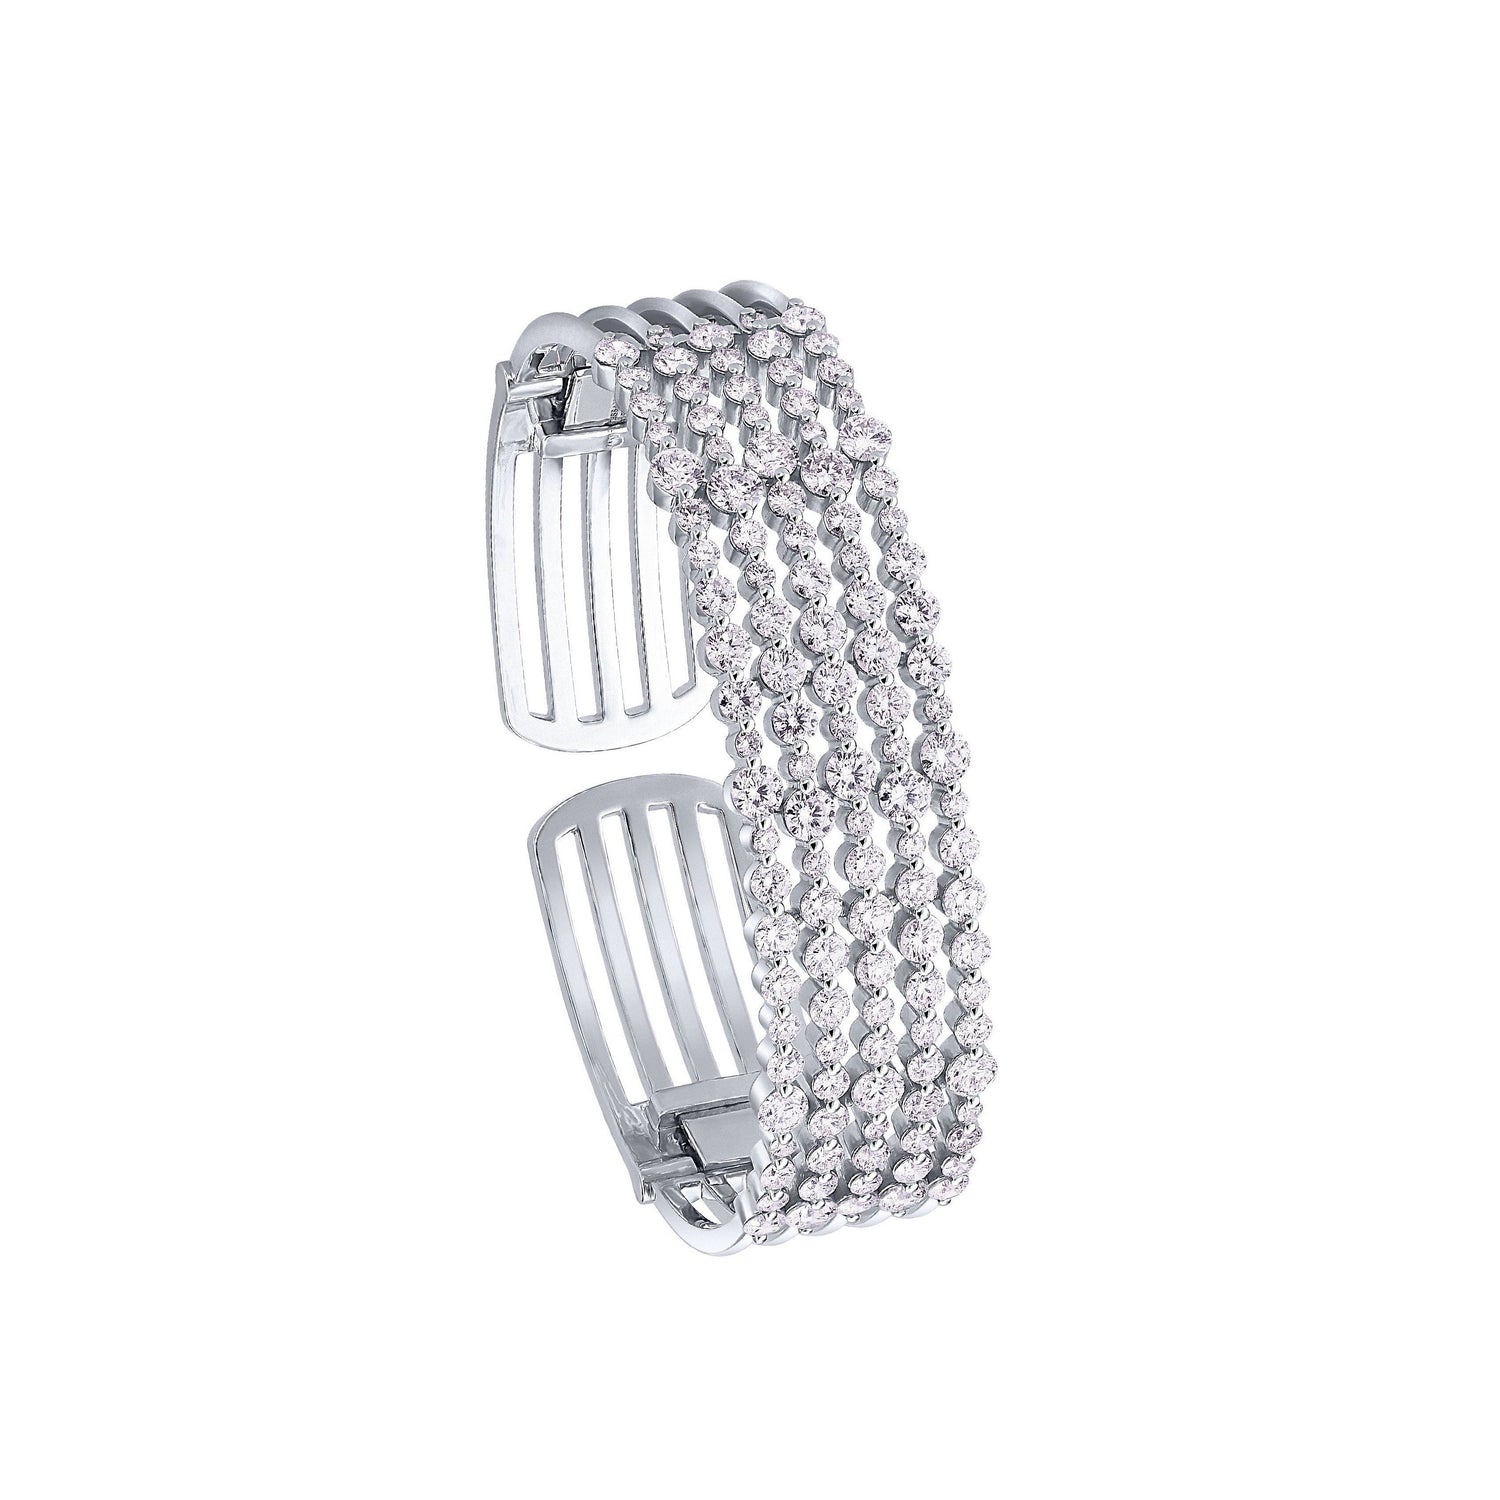 White Gold & Diamond Cuff Bracelet | Bridal Jewelry 